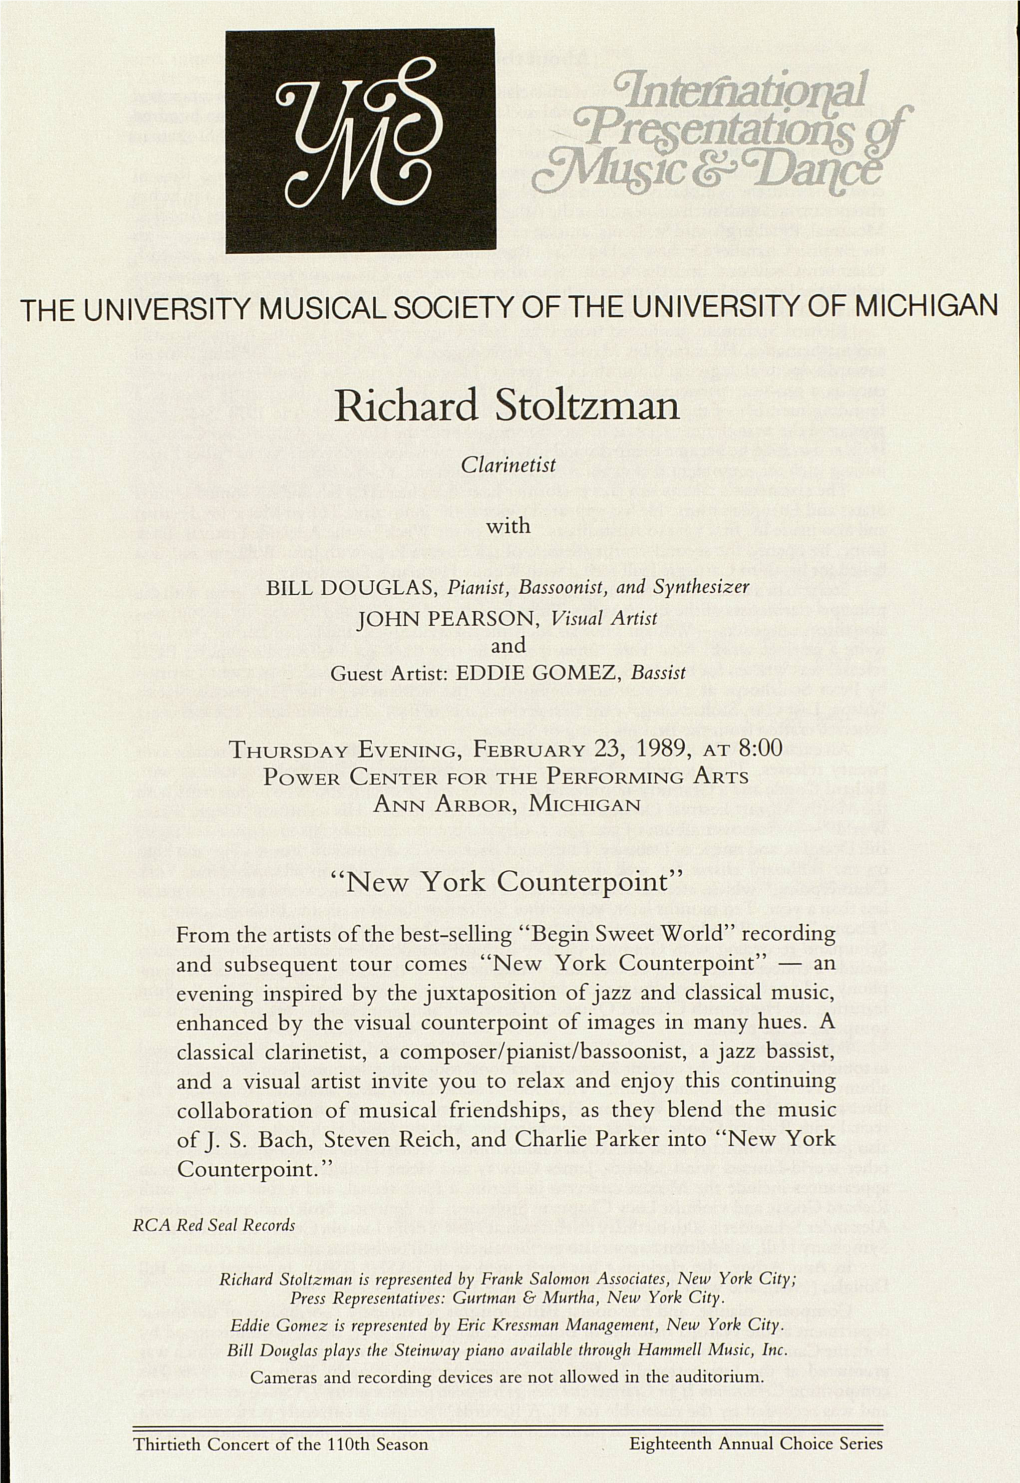 Richard Stoltzman